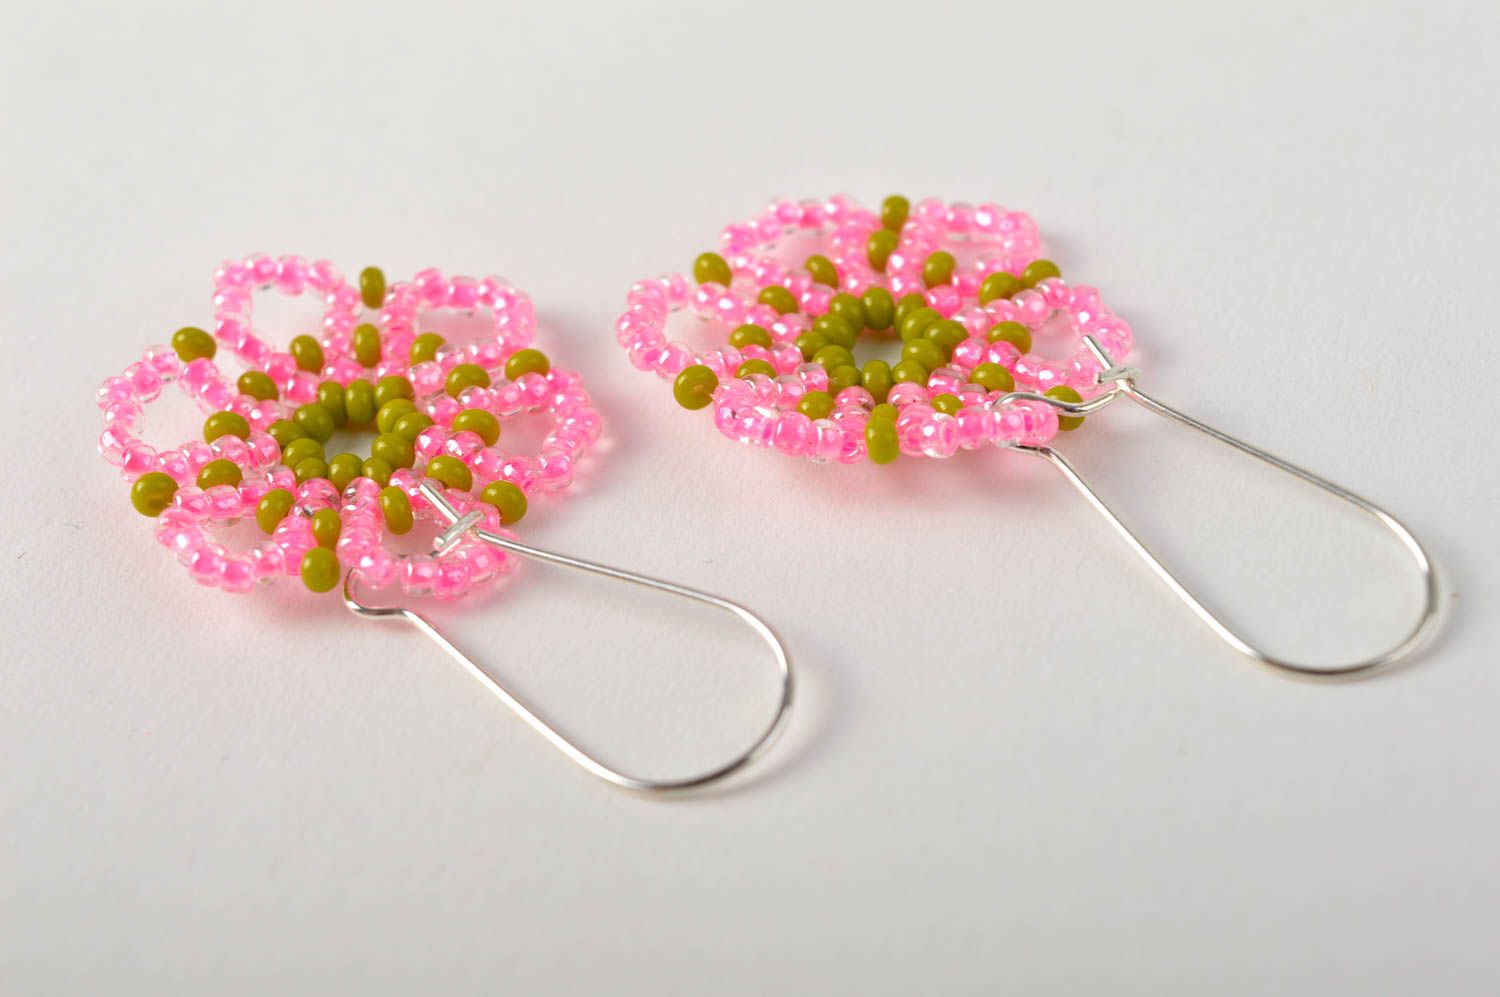 Handmade beaded flower earrings costume jewelry designs fashion trends photo 4